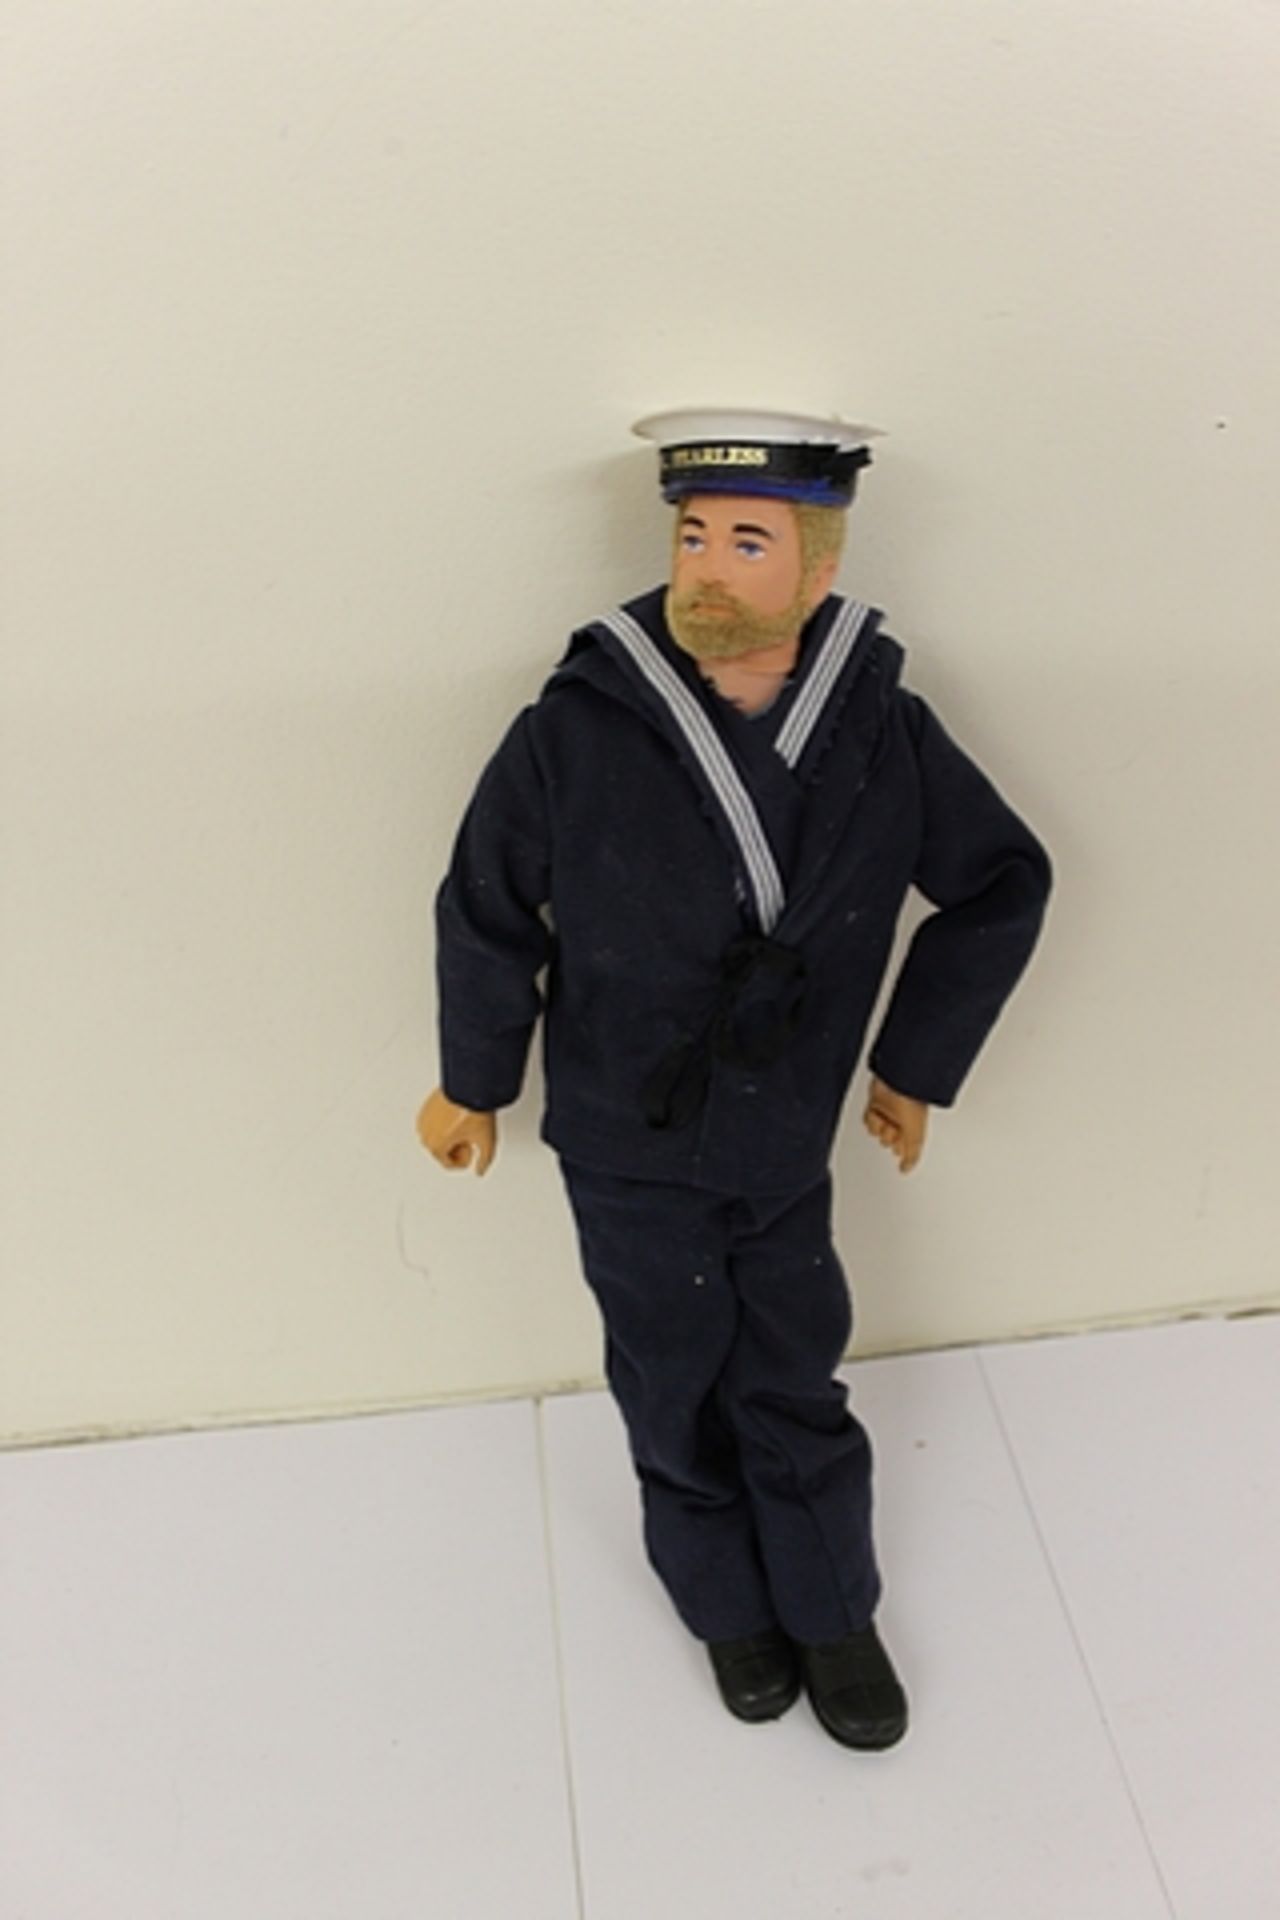 Palitoy Action Man Sailor - HMS Fearless - Rare GI Joe 12" Action Figure